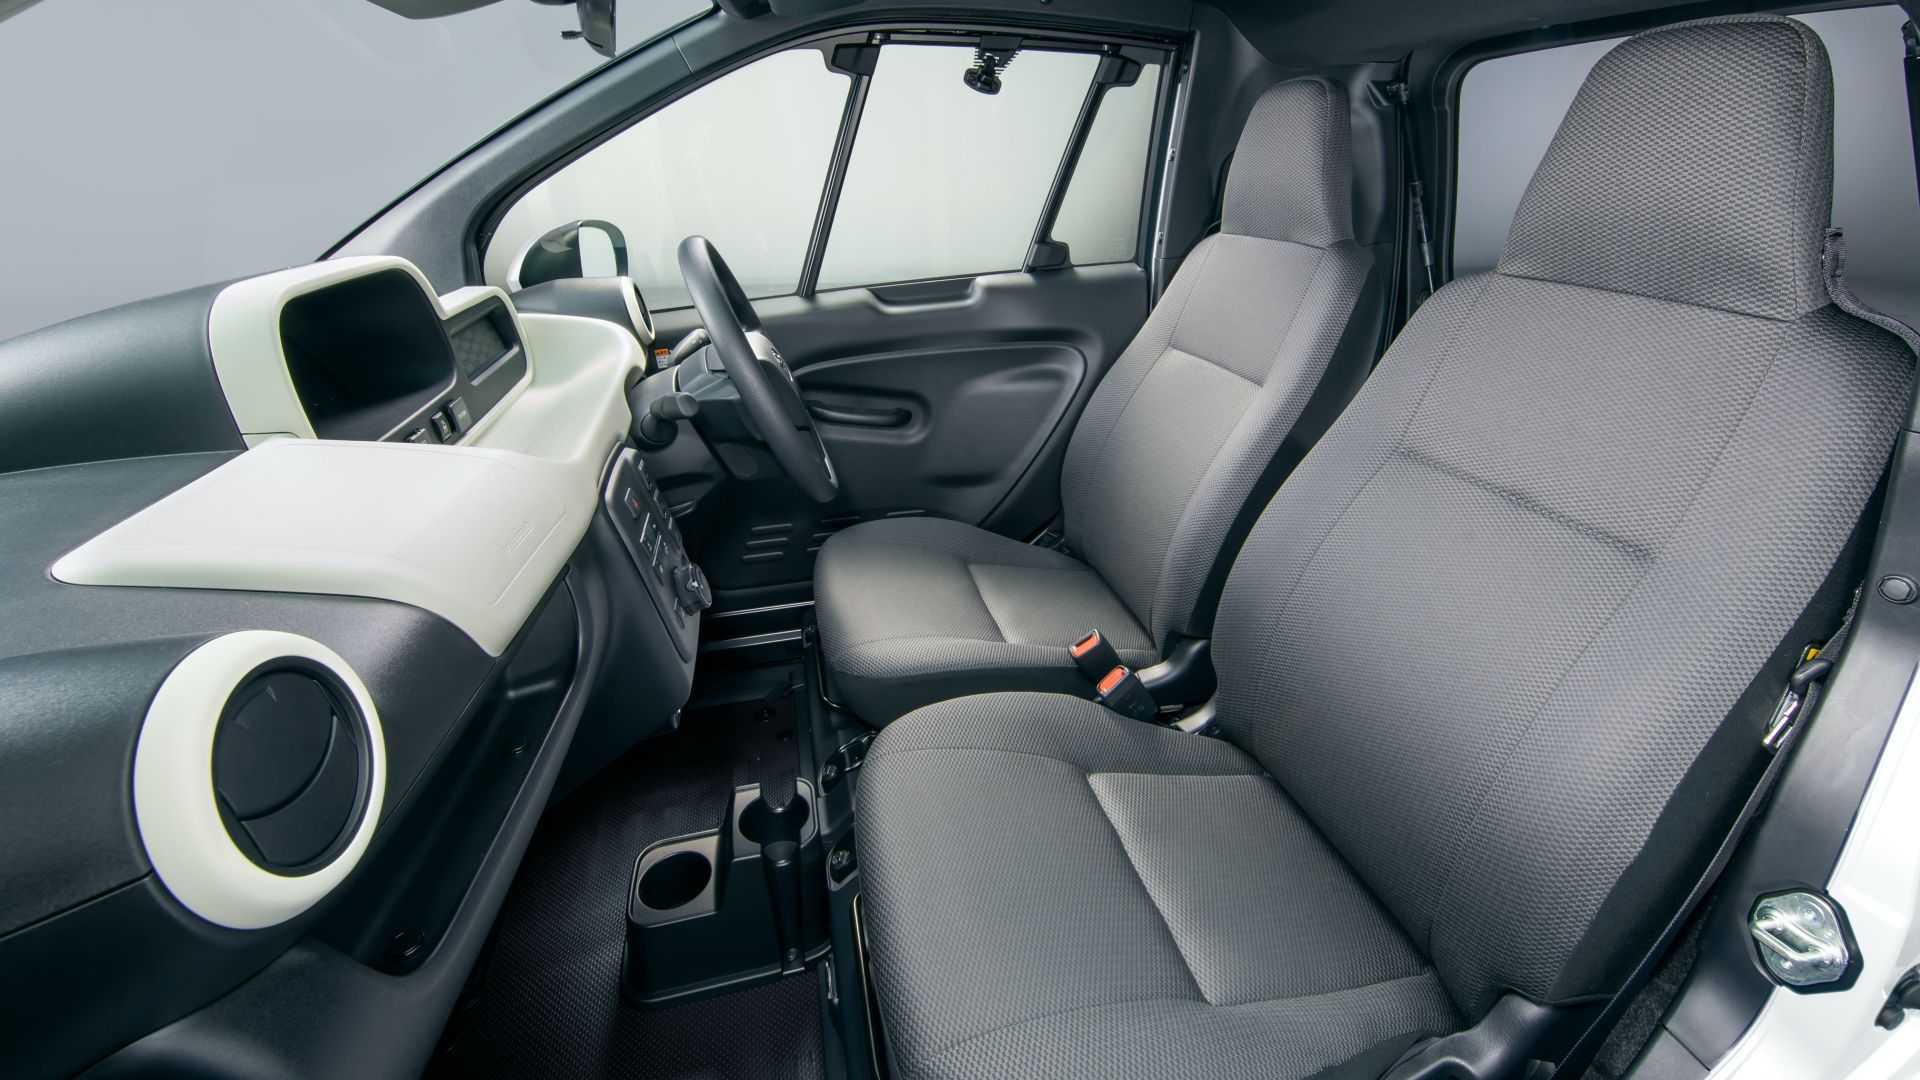 Toyota Cpod EV 6 - Toyota C+pod EV Photos Gallery